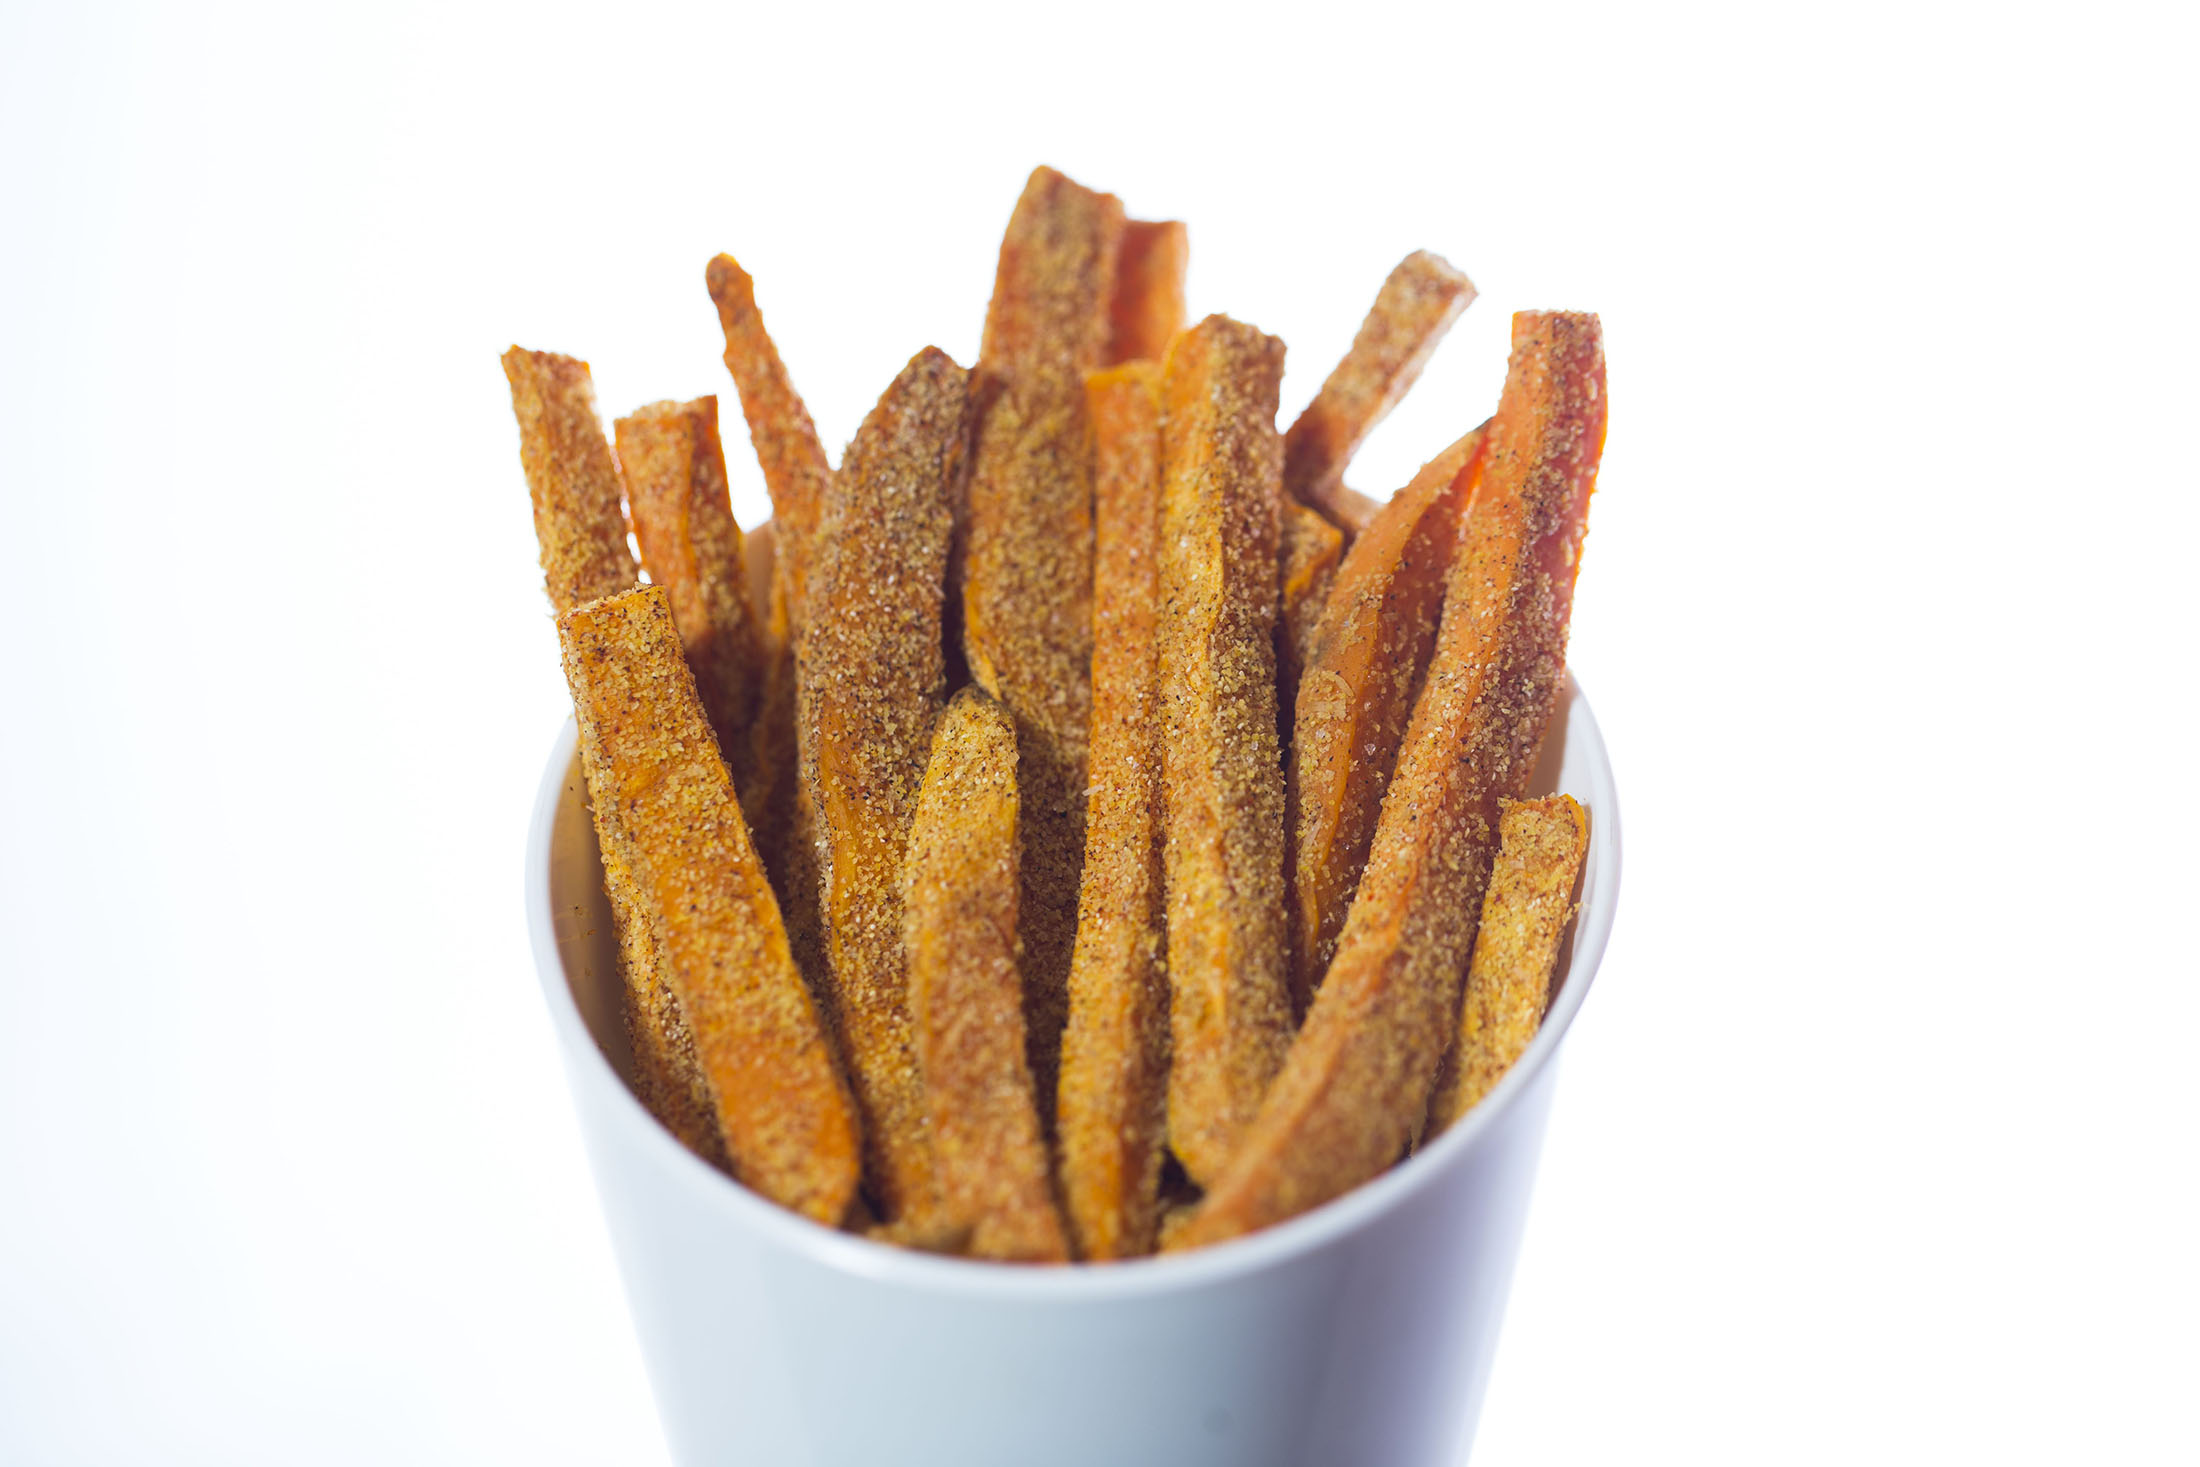 The Hip, Orange Super Food Increasingly Displacing French Fries - Bloomberg